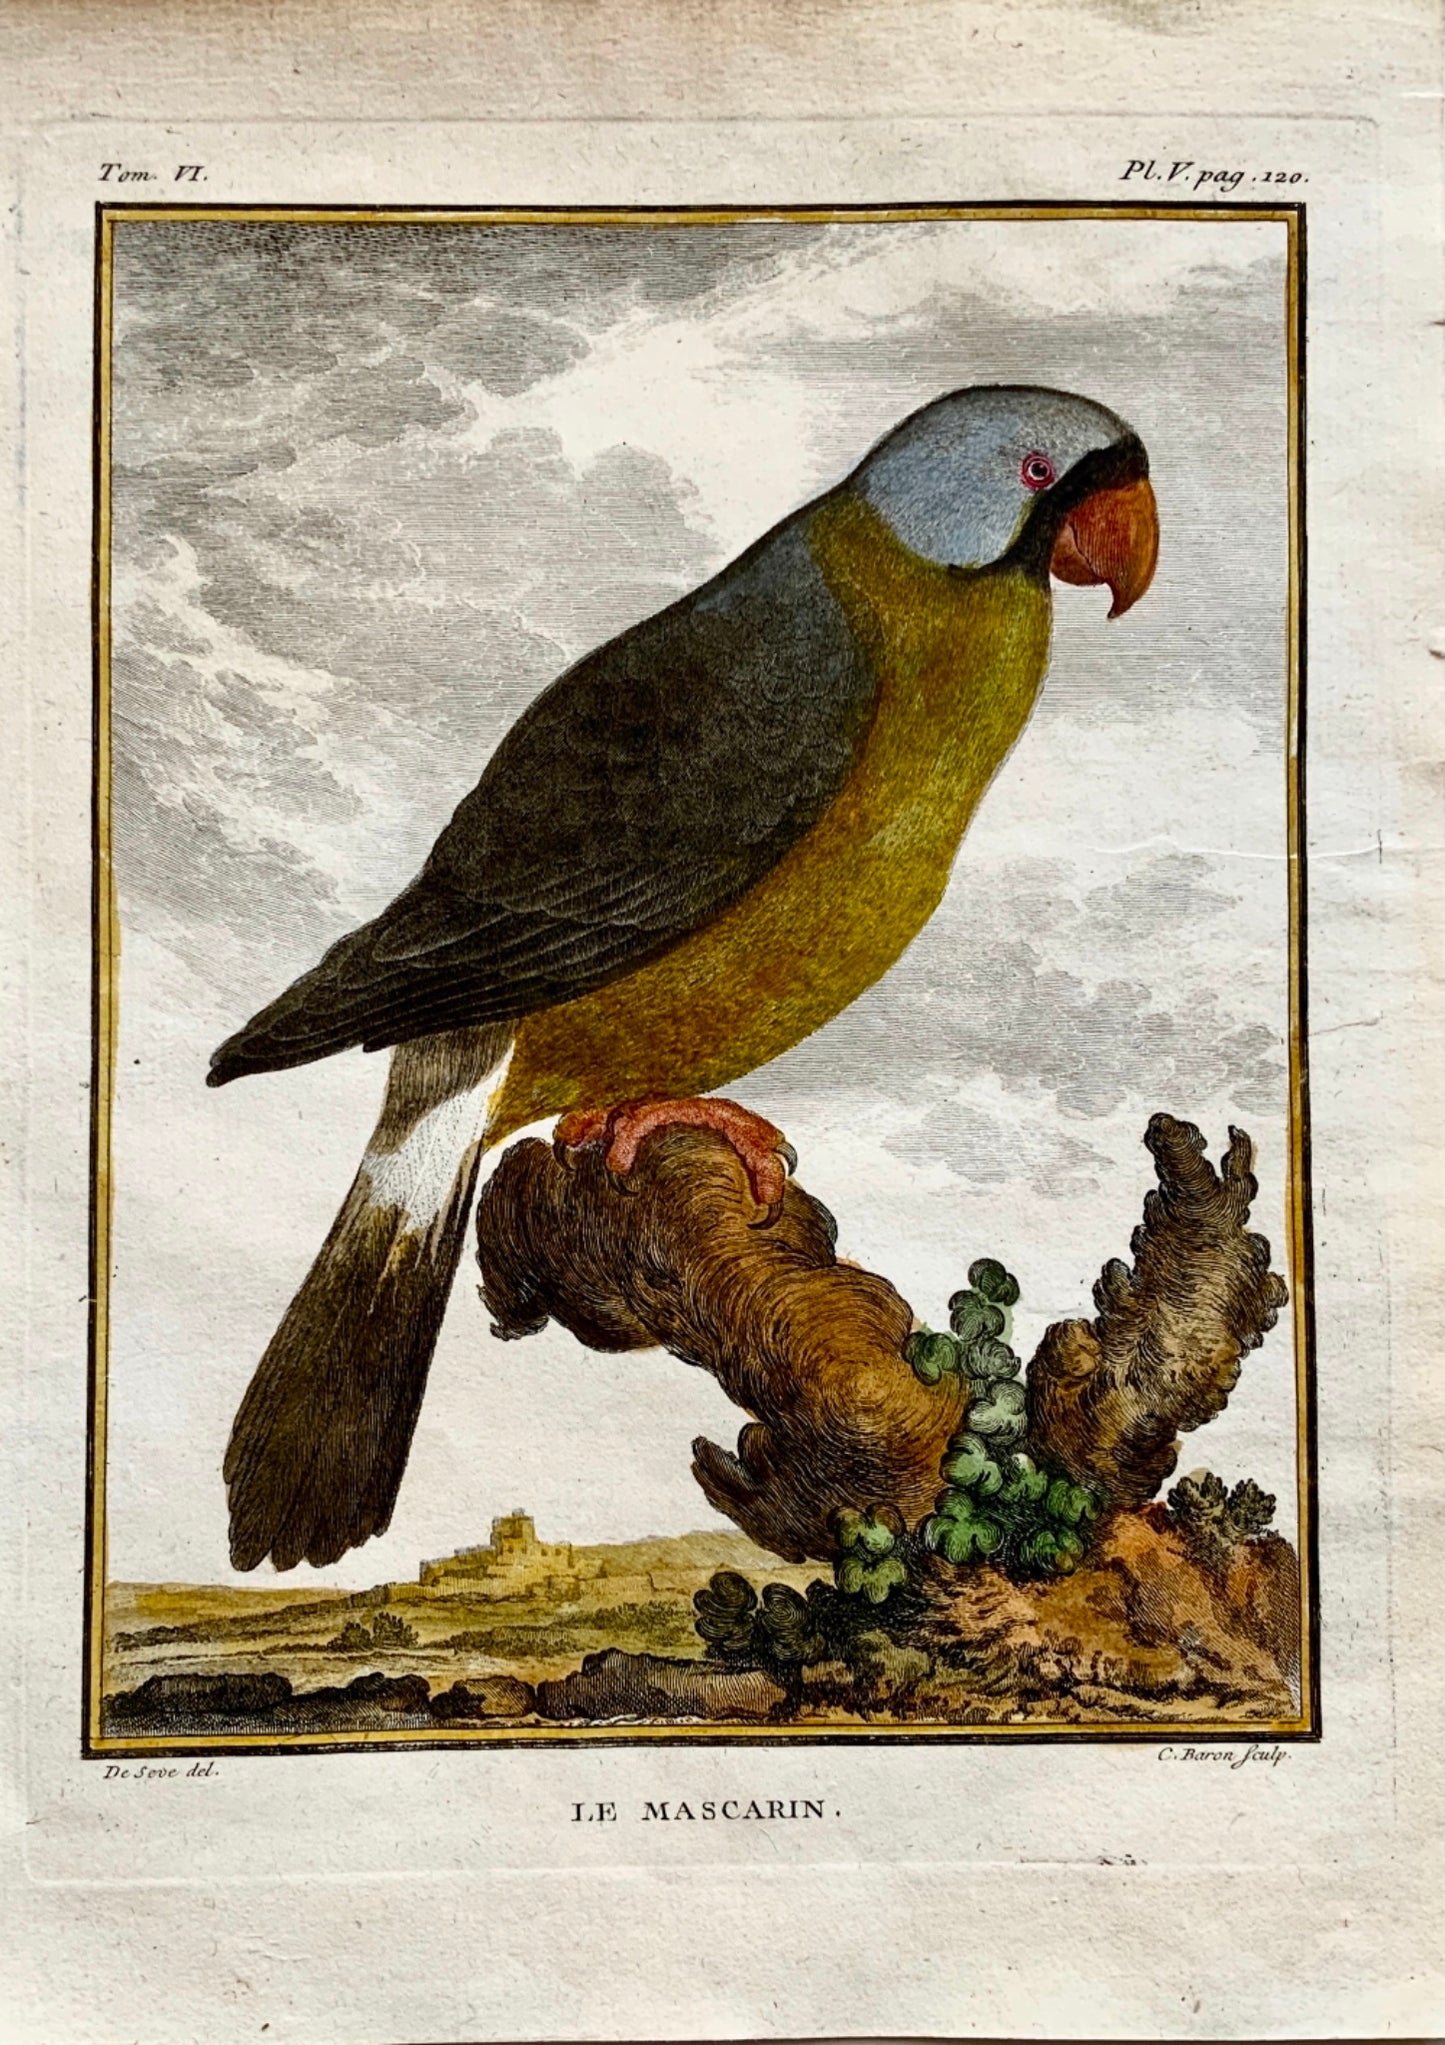 1779 Haussard after Jacques de Seve - Mascarene Parrot - 4to engraving - Ornithology